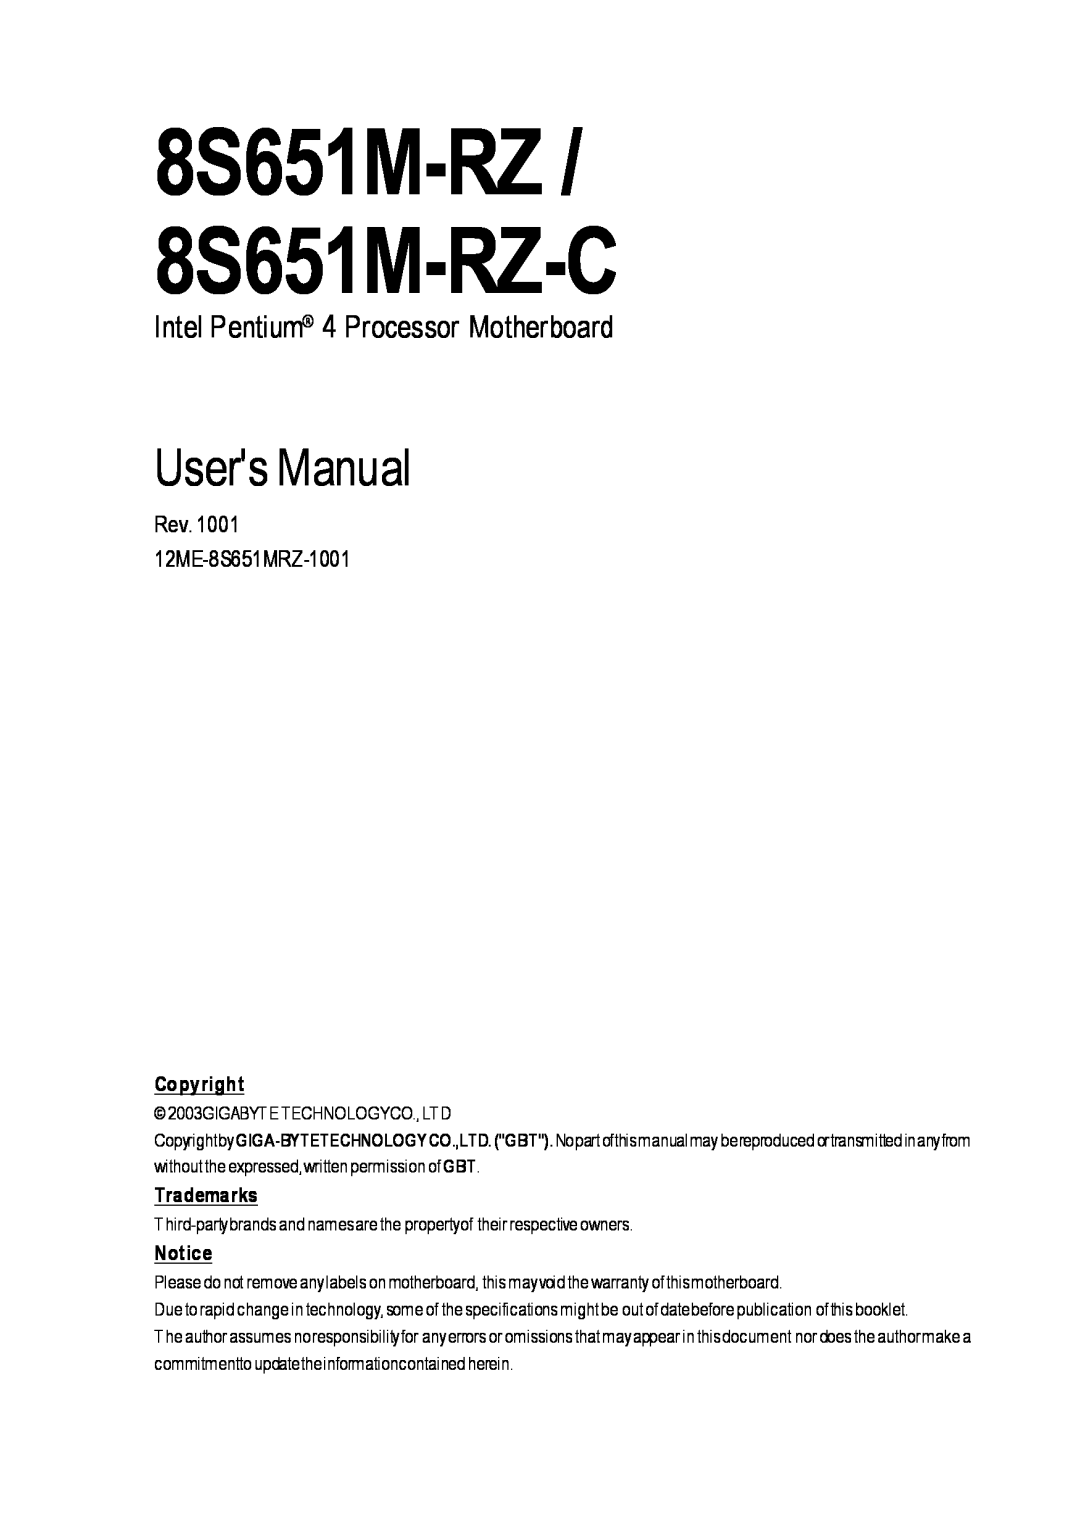 Intel user manual 8S651M-RZ / 8S651M-RZ-C, Users Manual, Intel Pentium 4 Processor Motherboard, Copyright, Trademarks 